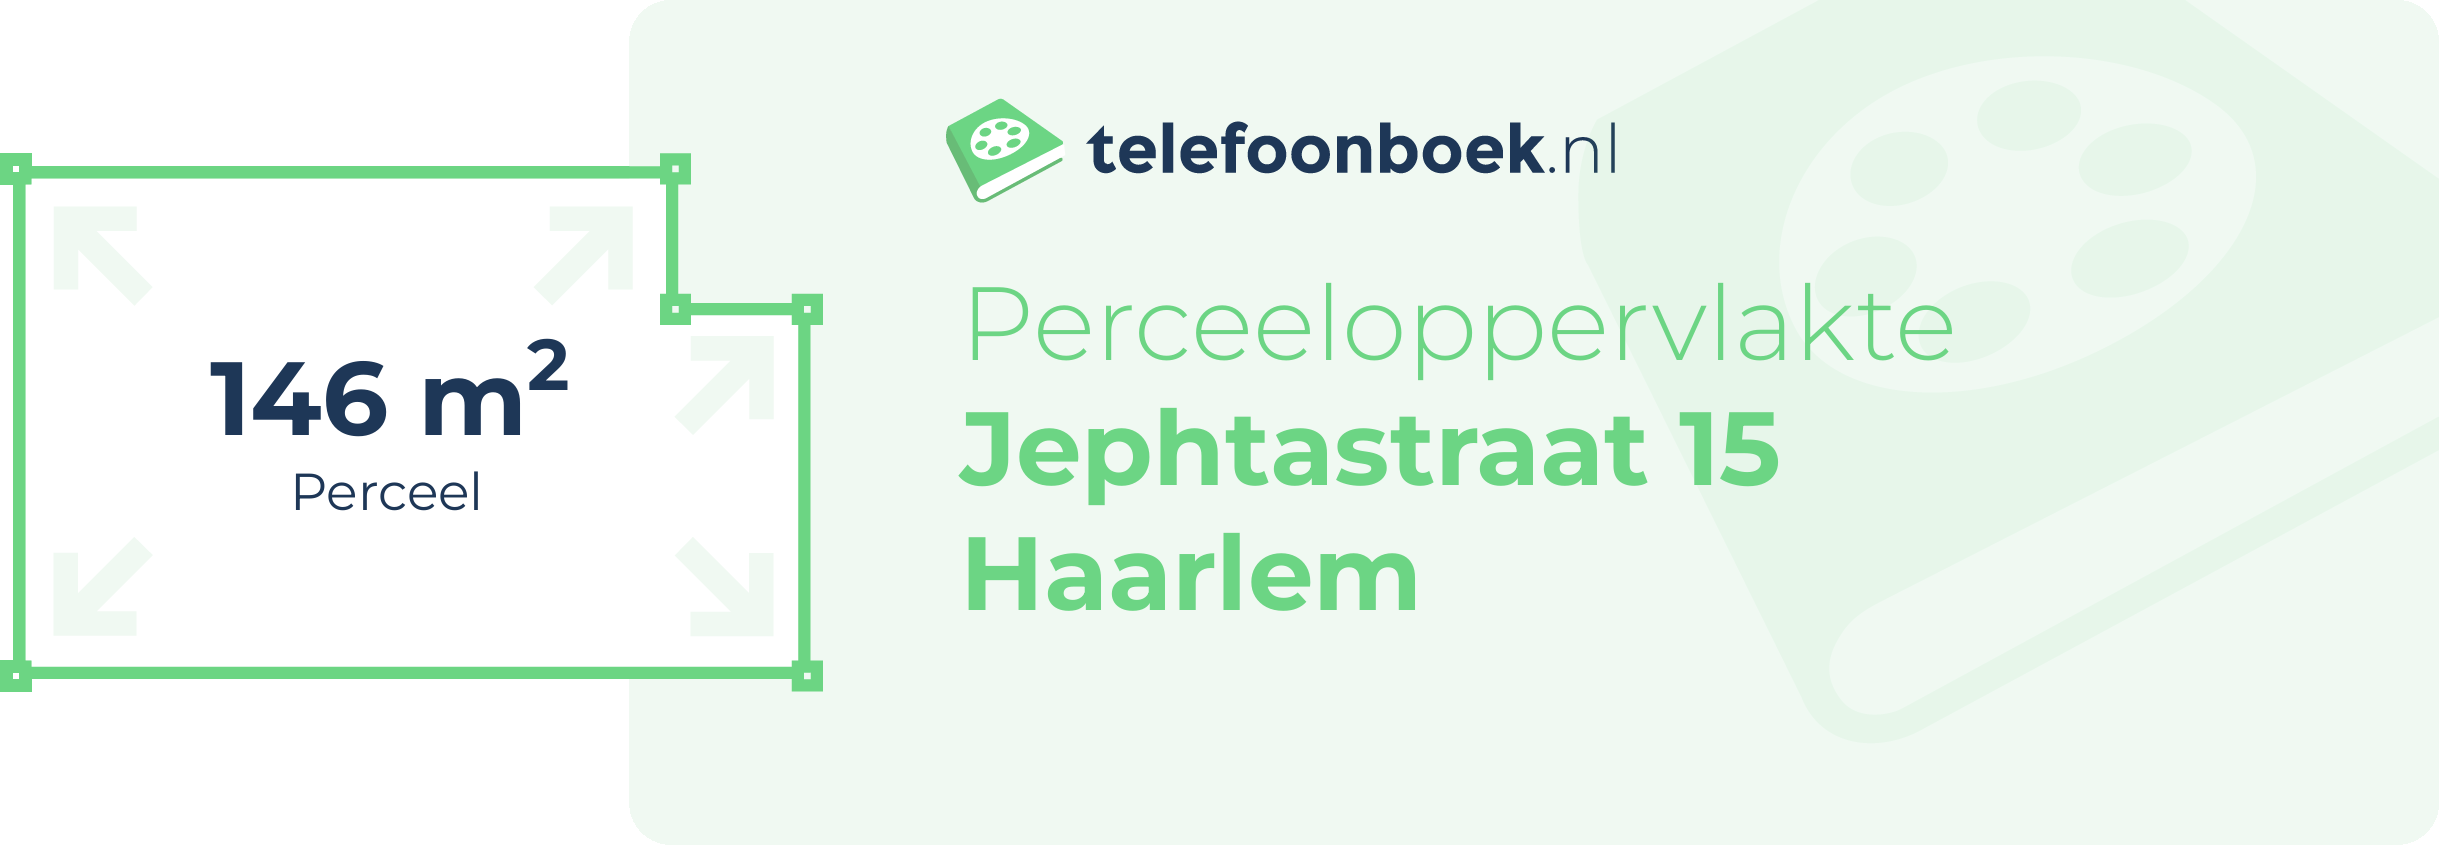 Perceeloppervlakte Jephtastraat 15 Haarlem